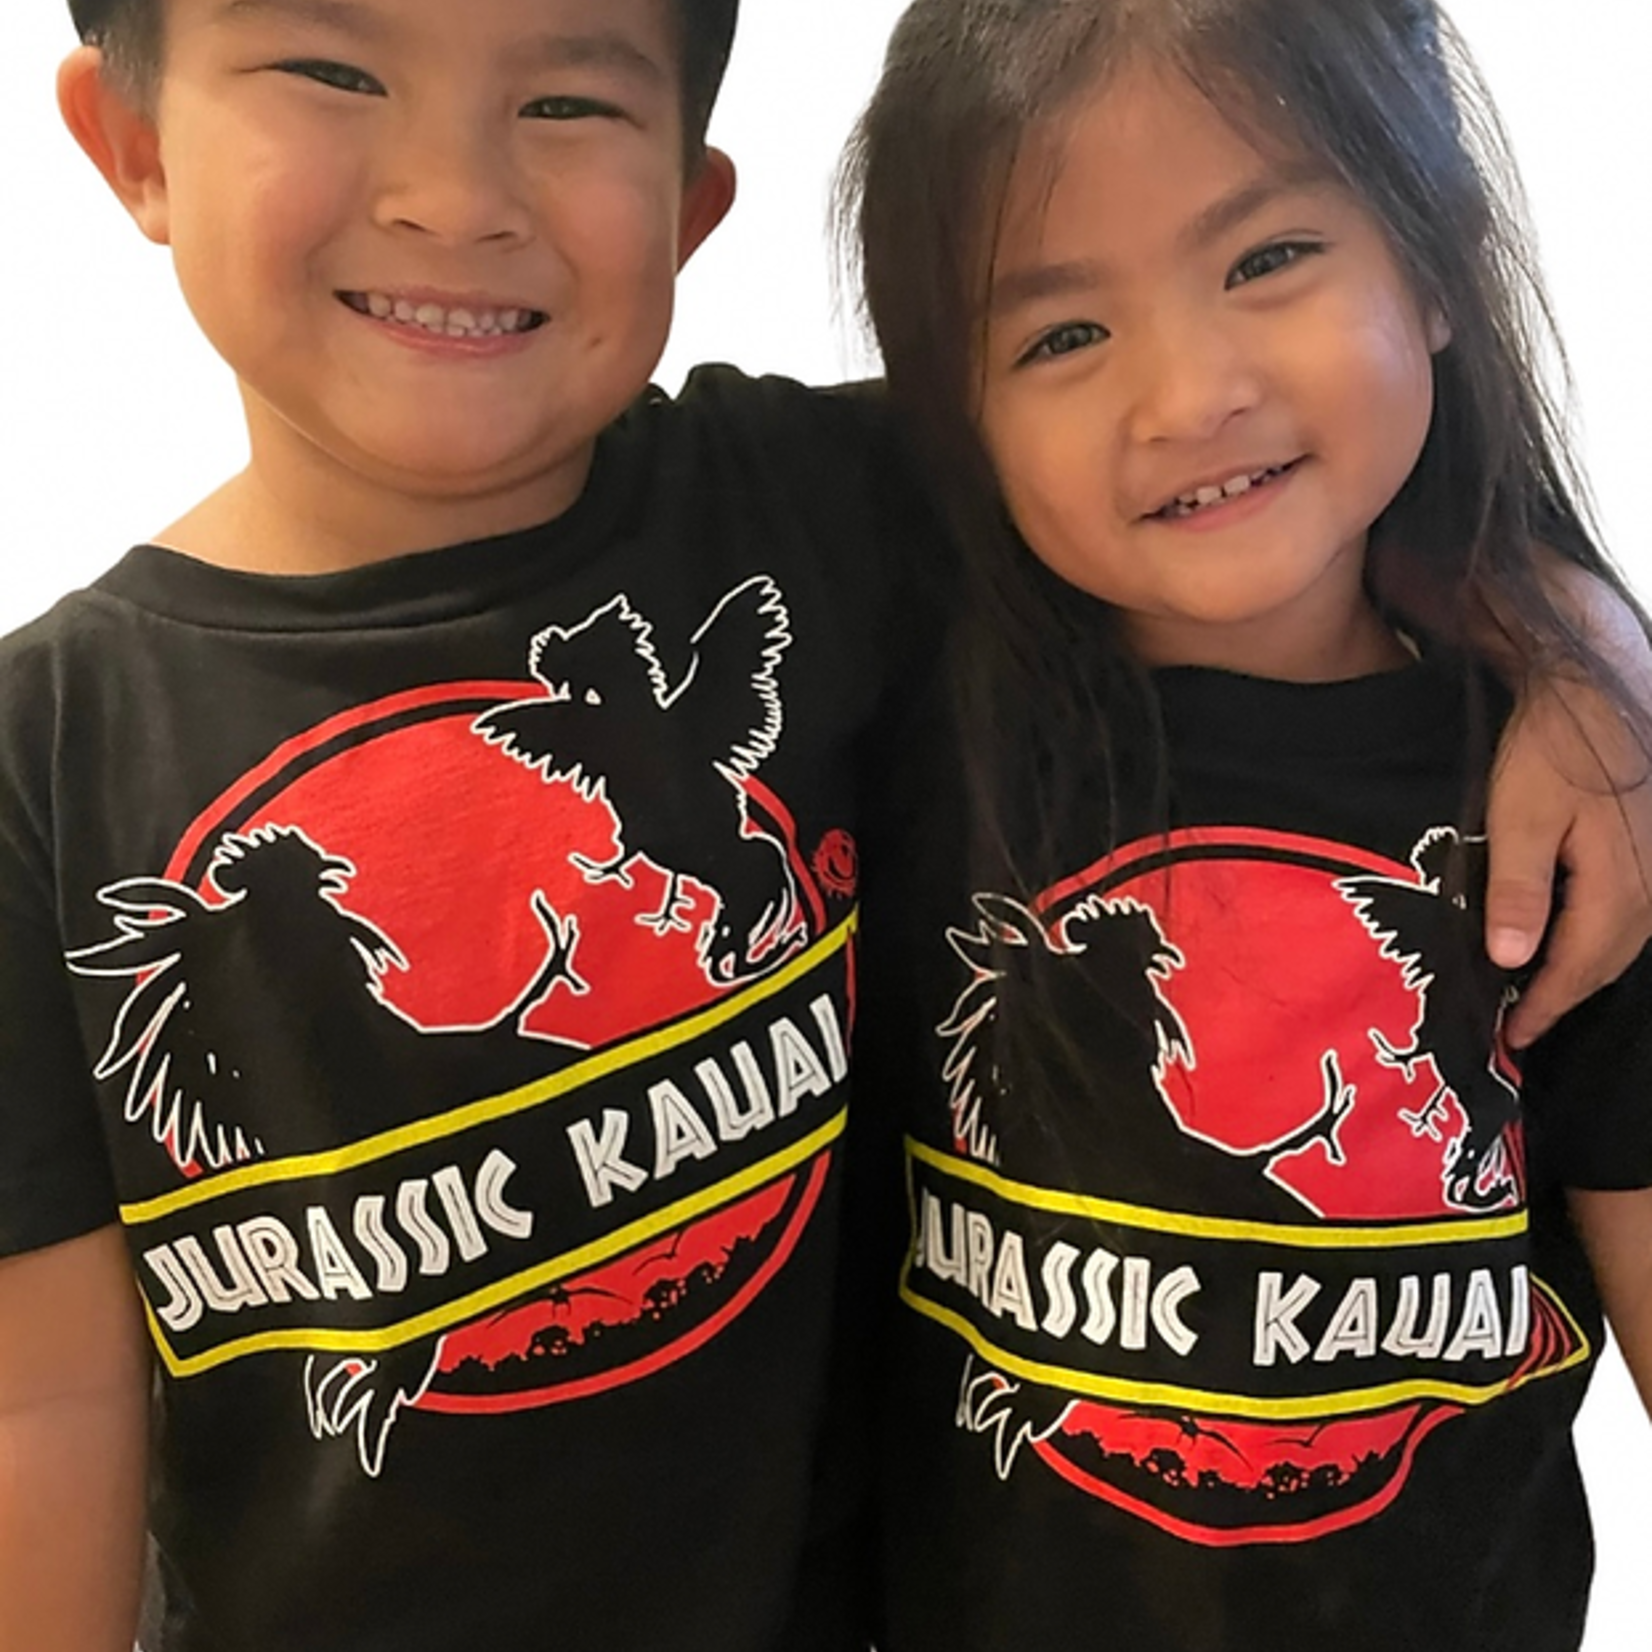 All Red Eye Clothing Youth Jurassic Kauai T-shirt